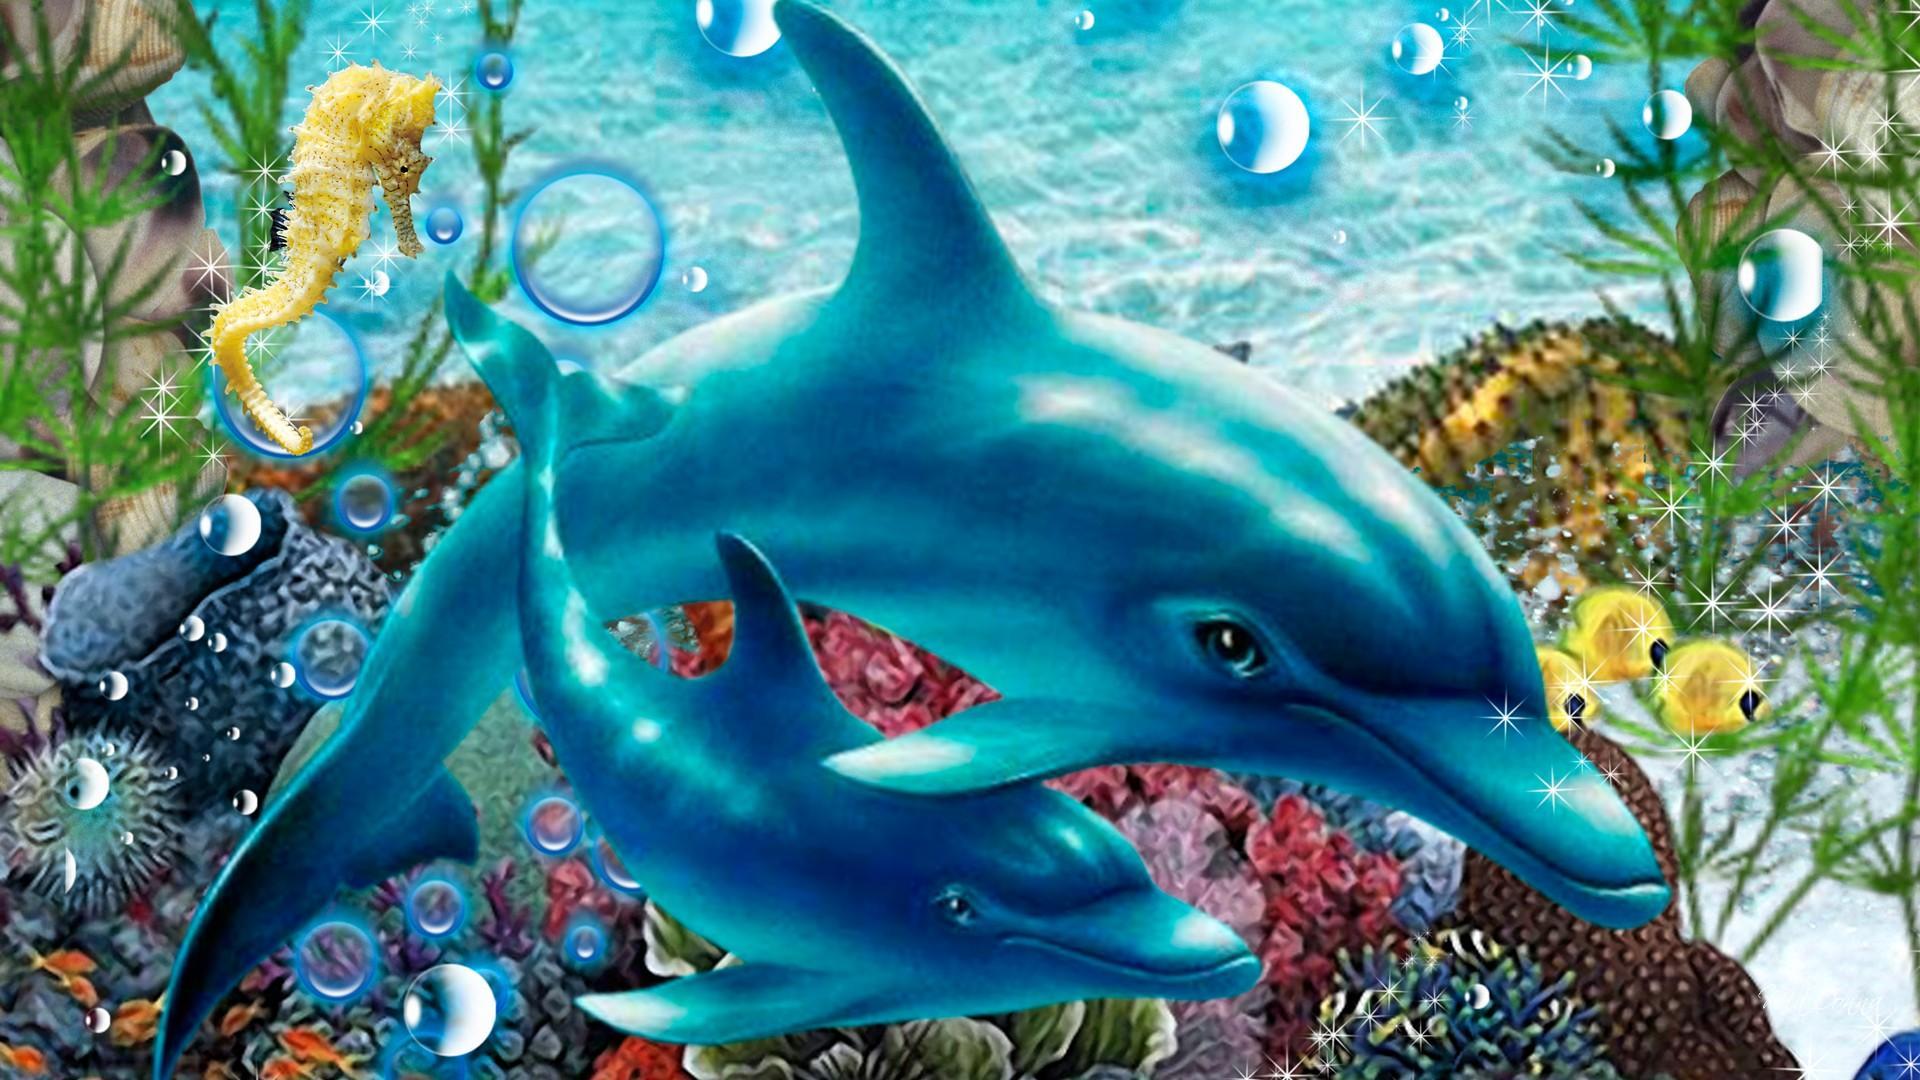 fondos de pantalla fundo do mar,delfín,biología marina,delfín nariz de botella común,delfín común de pico corto,mamífero marino